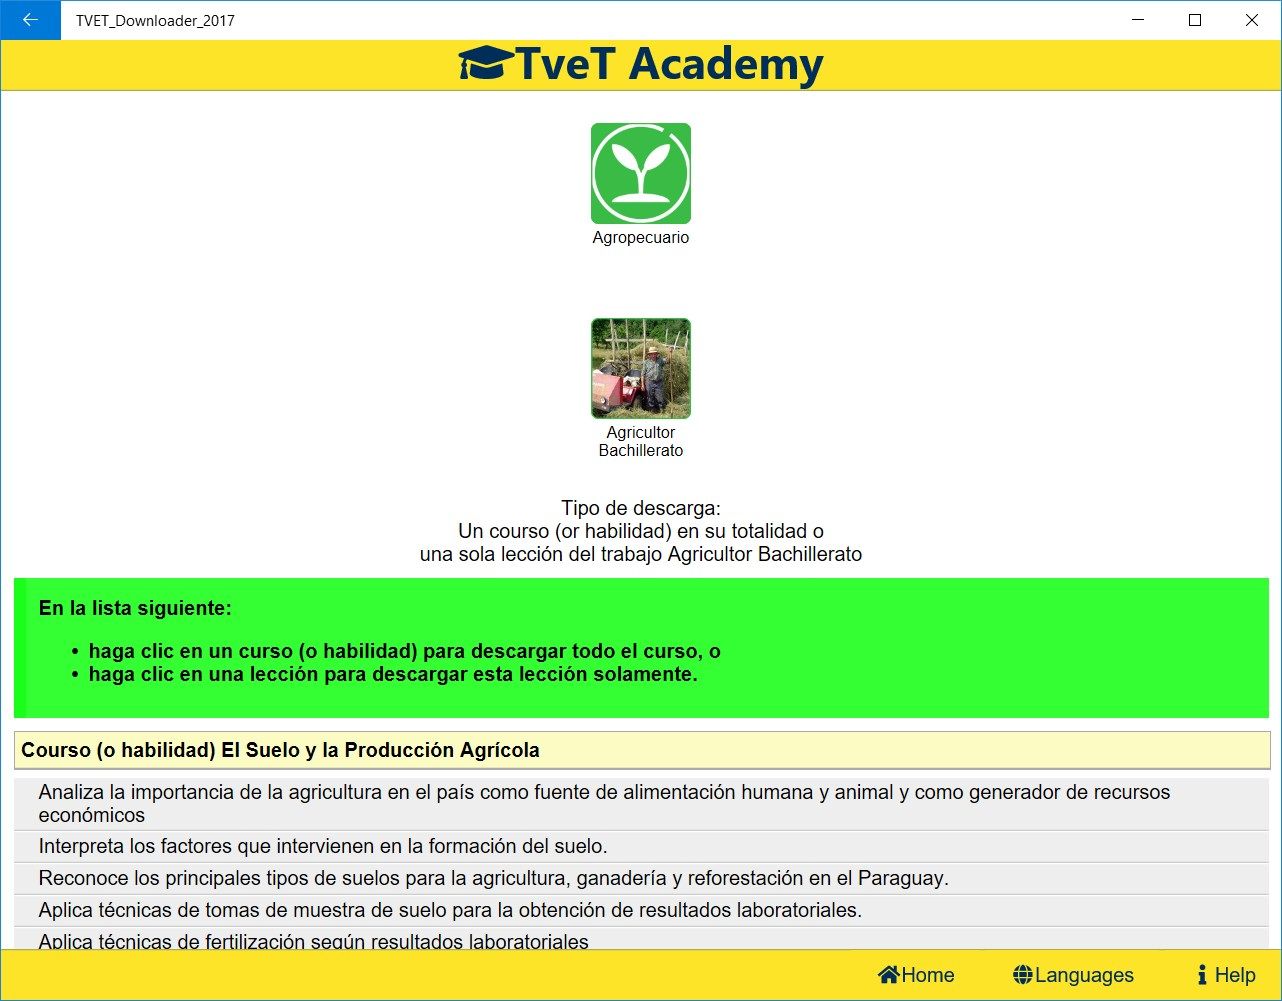 TVET Academy Downloader